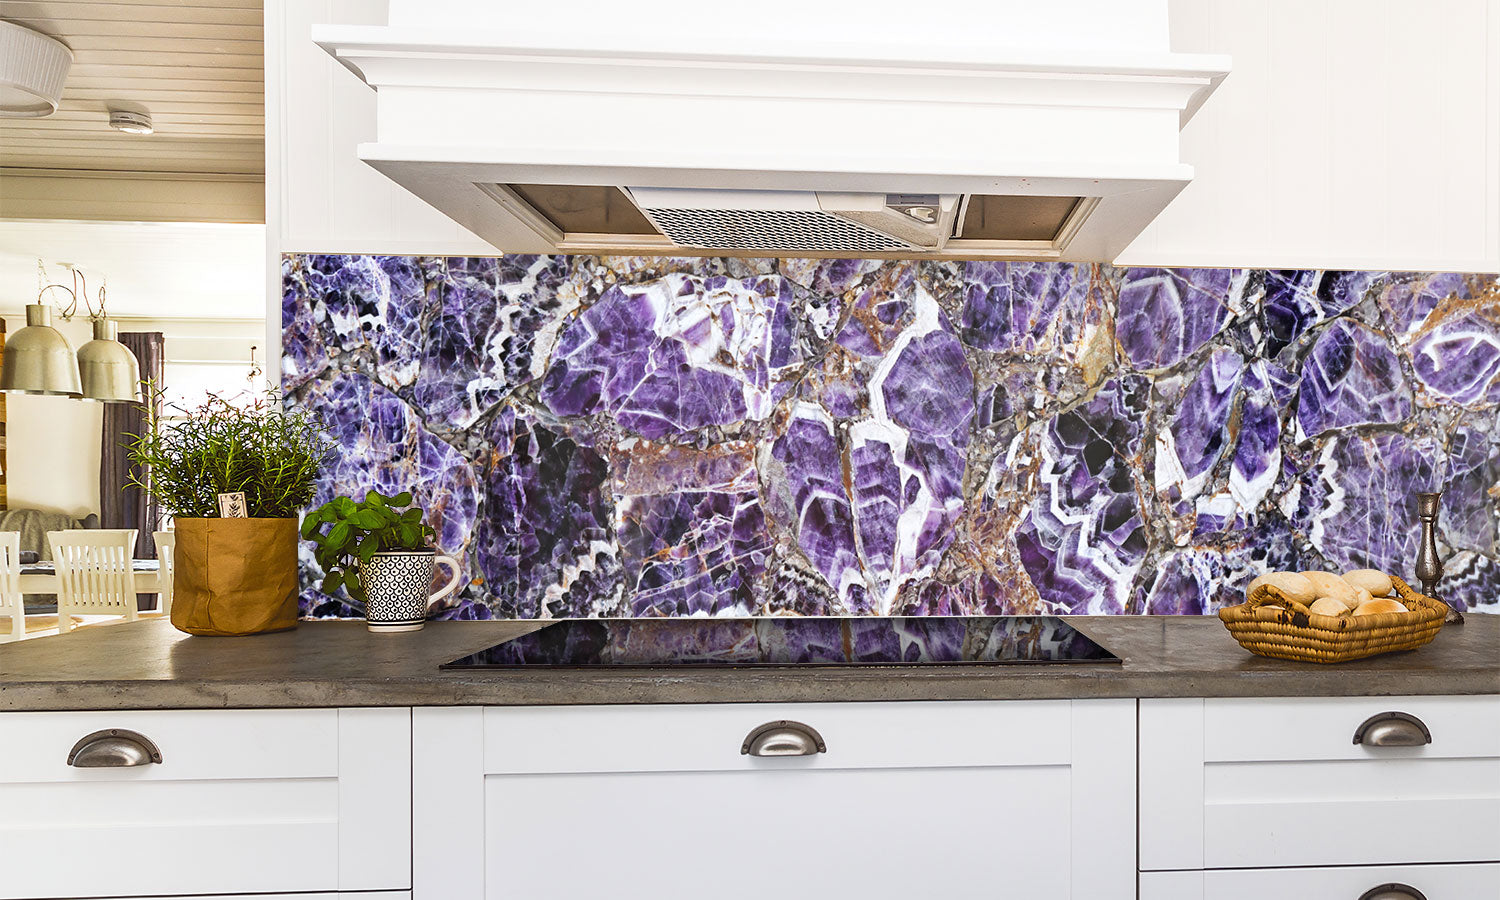 Paneli za kuhinje Marble Purple -  Stakleni / PVC ploče / Pleksiglas -  sa printom za kuhinju, Zidne obloge PKU062